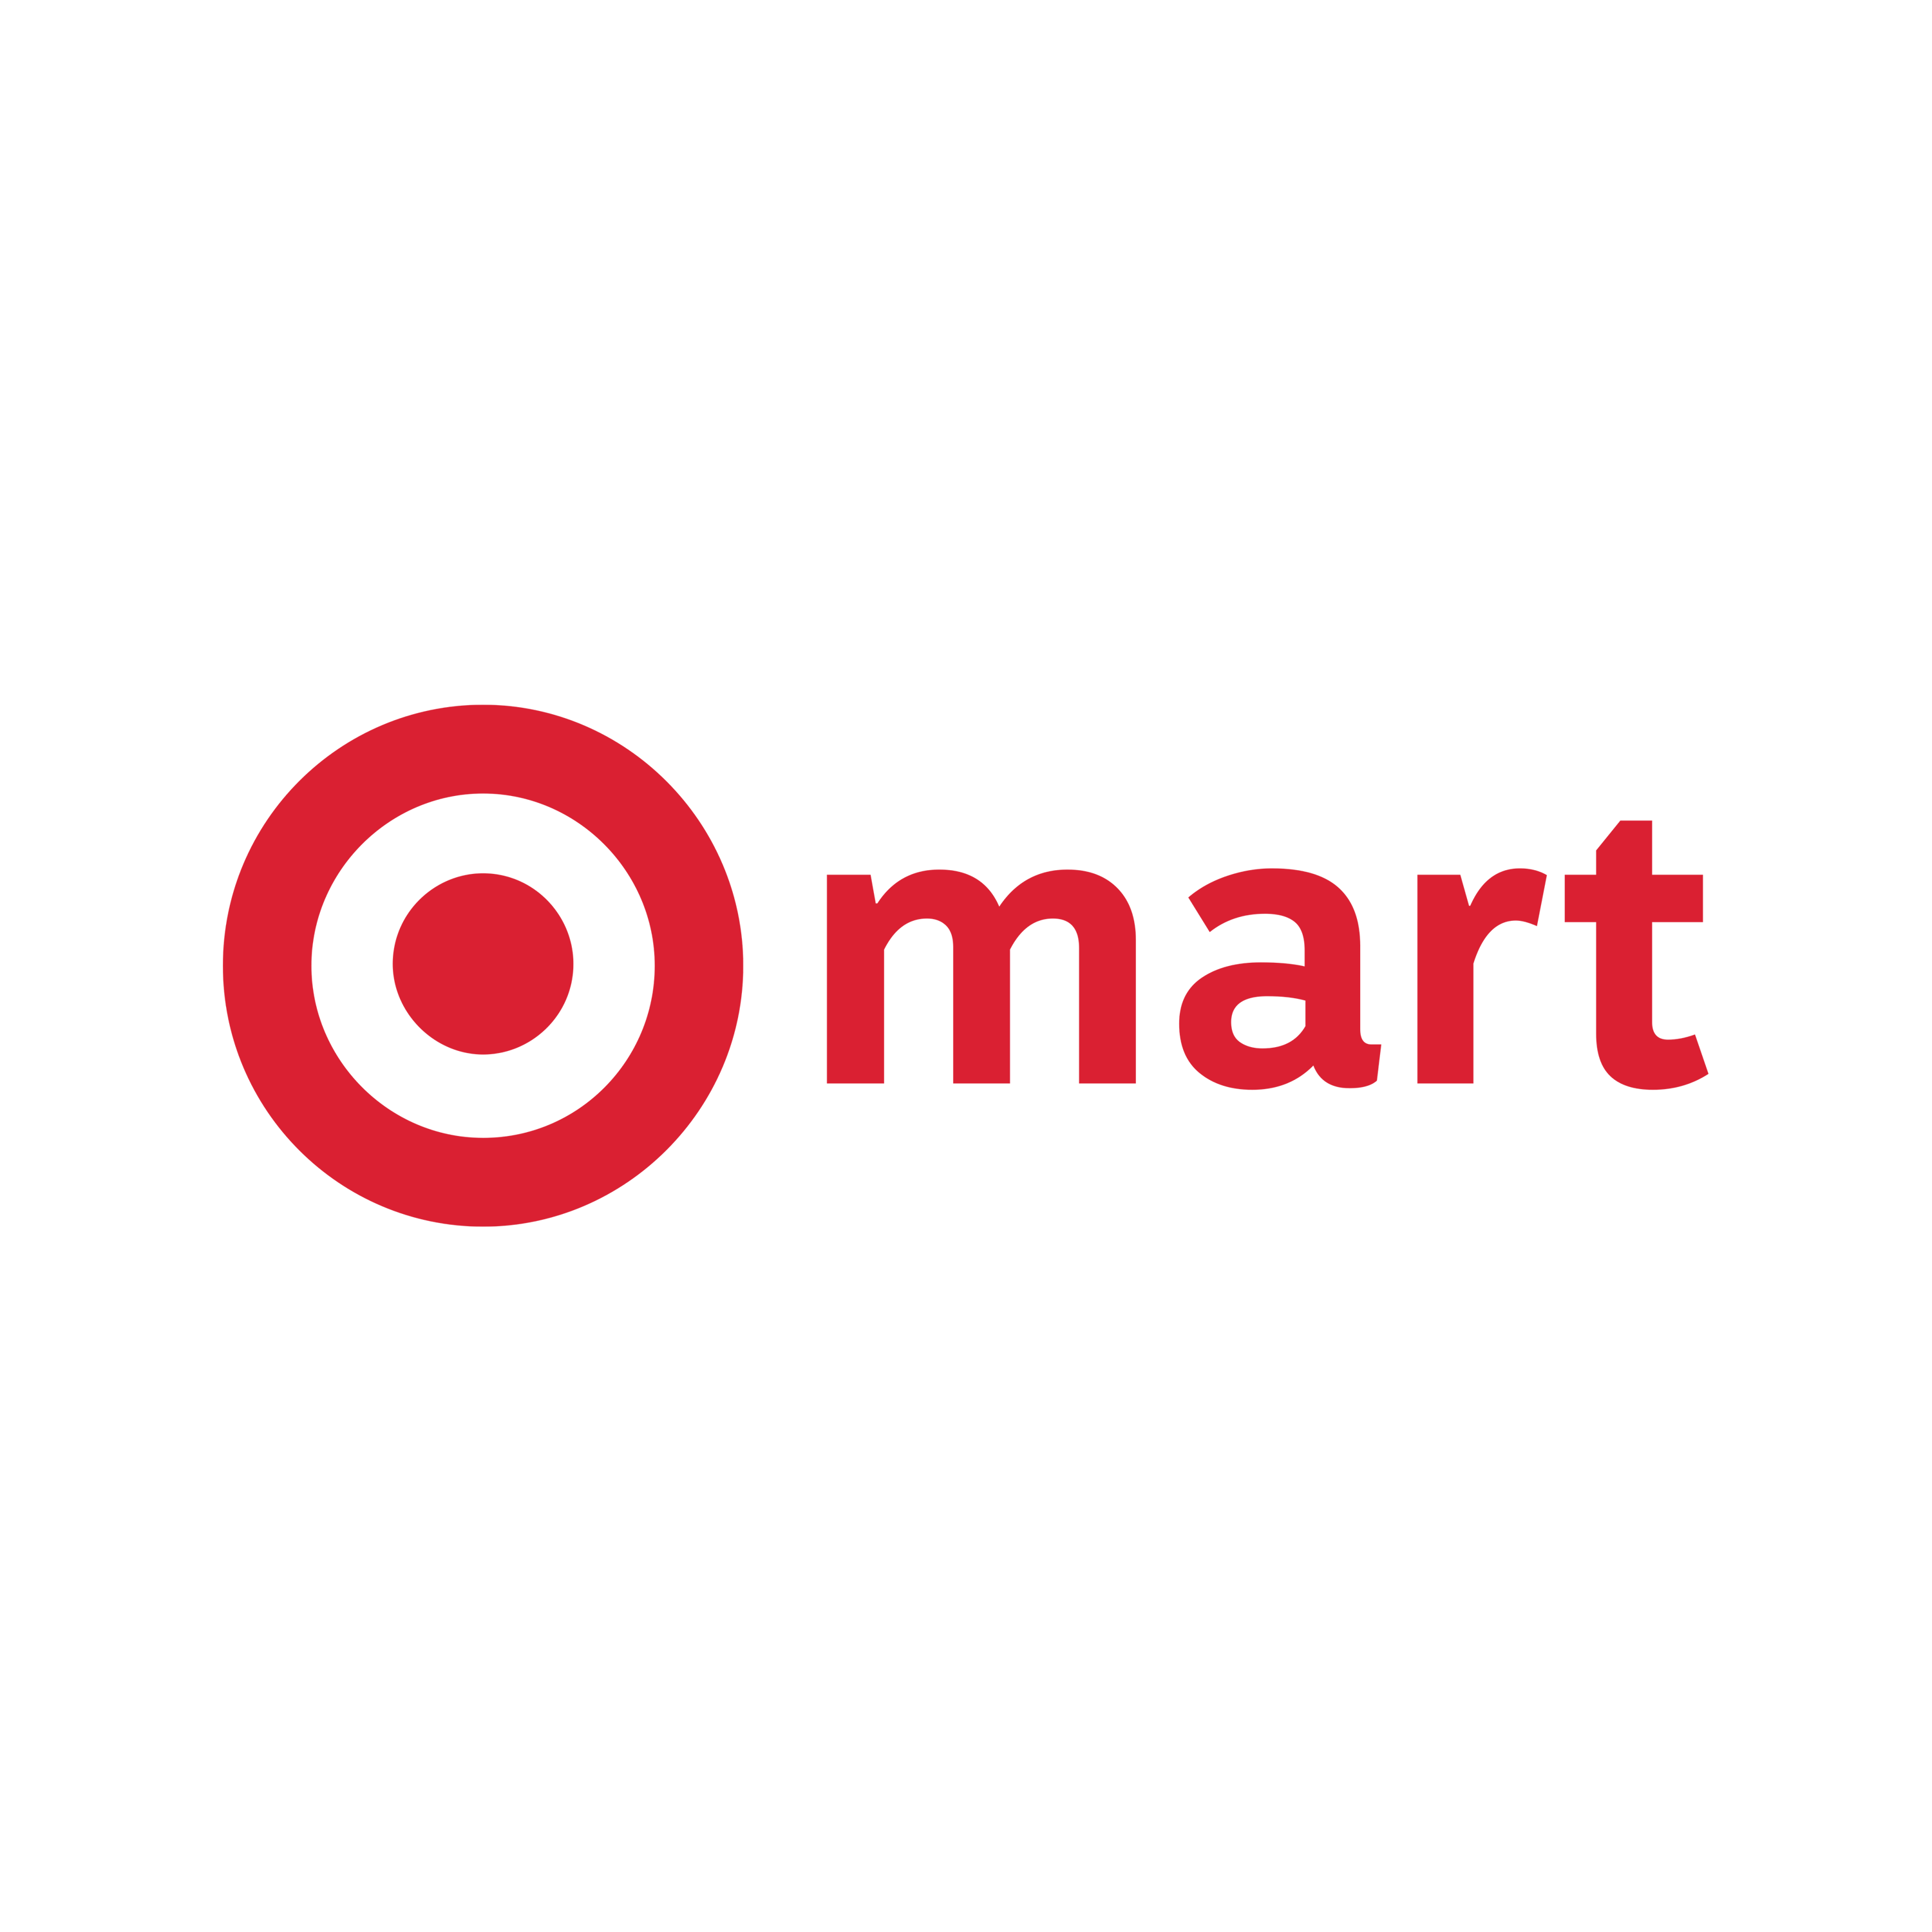 Target Mart Logo Transparent Picture